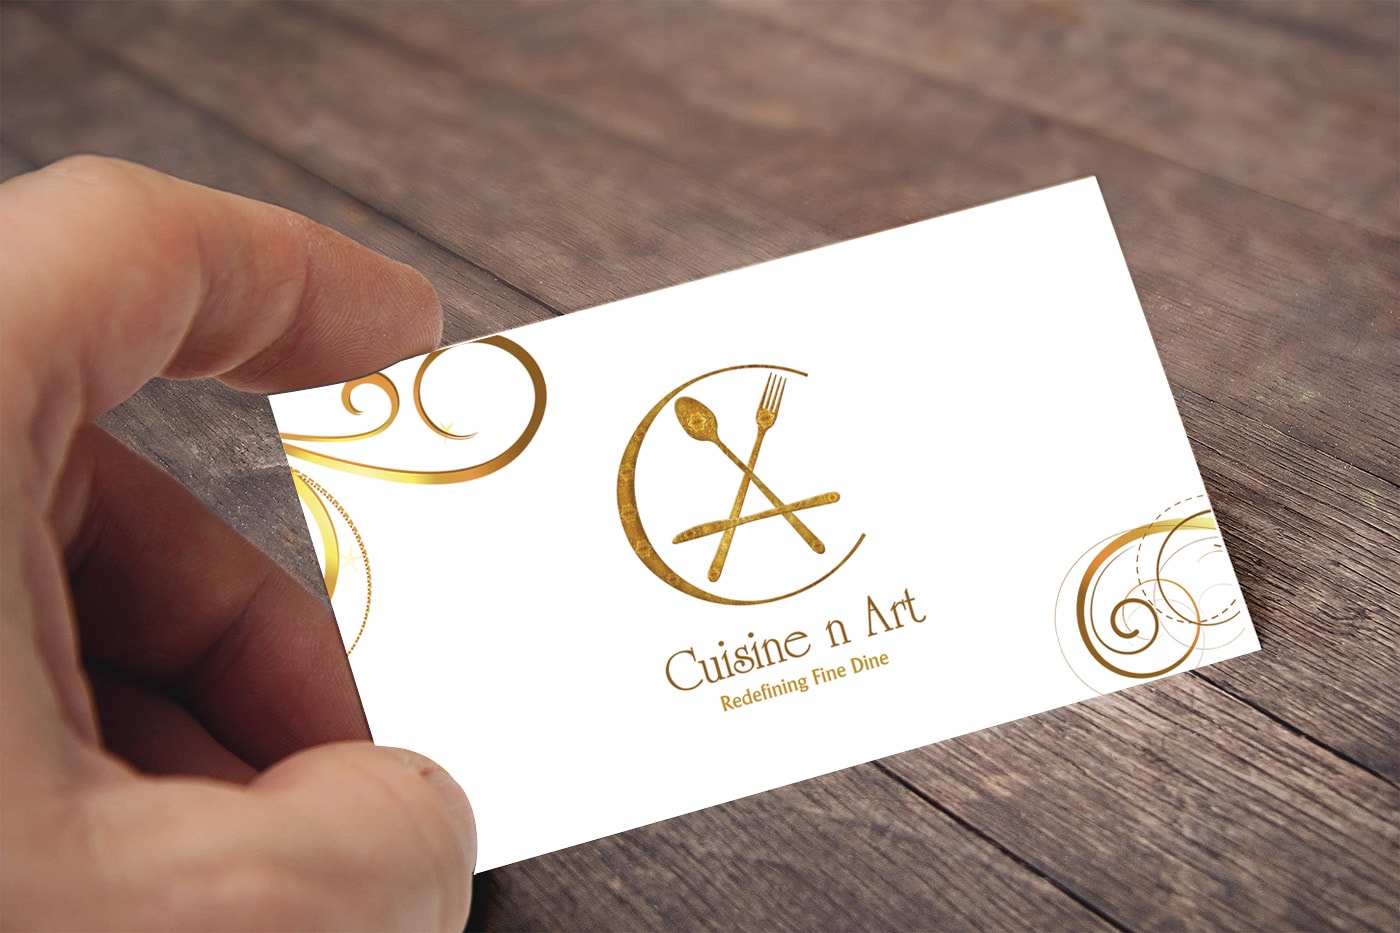 web design services, cuisinenart logo